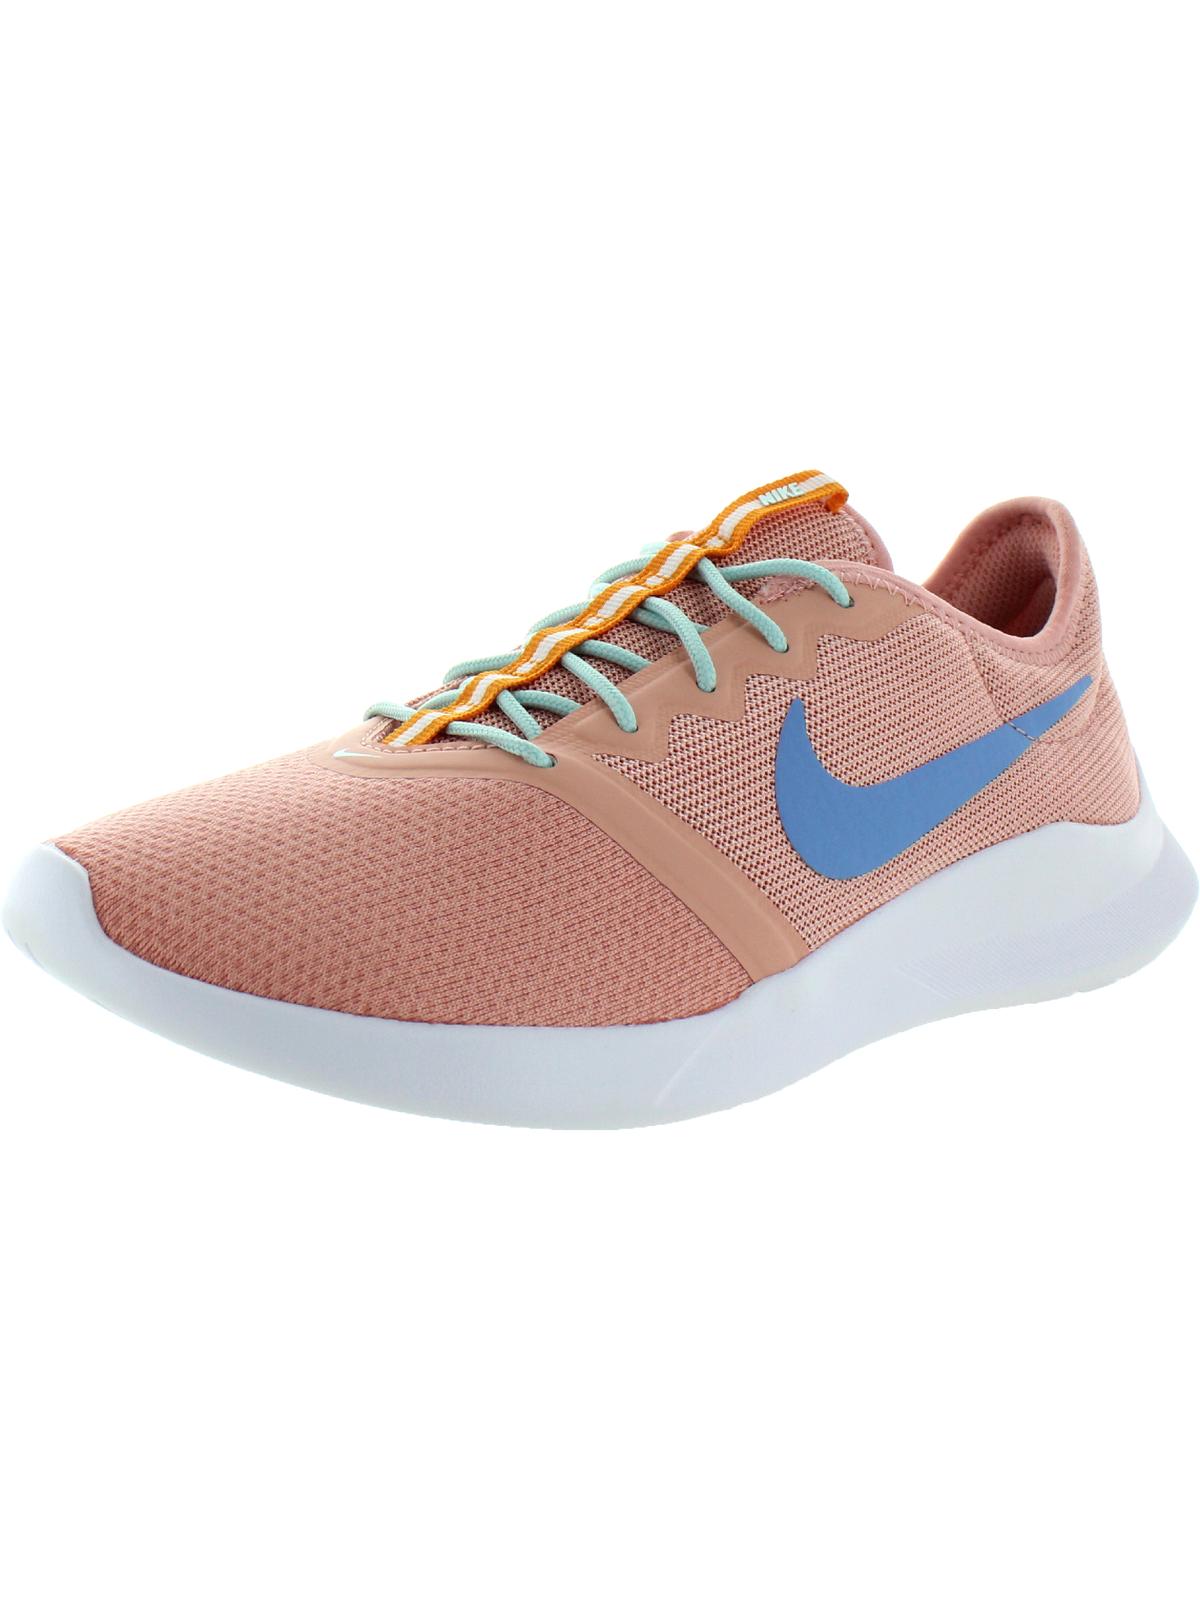 Nike Womens VTR Comfort Mesh Running Shoes - image 1 of 2